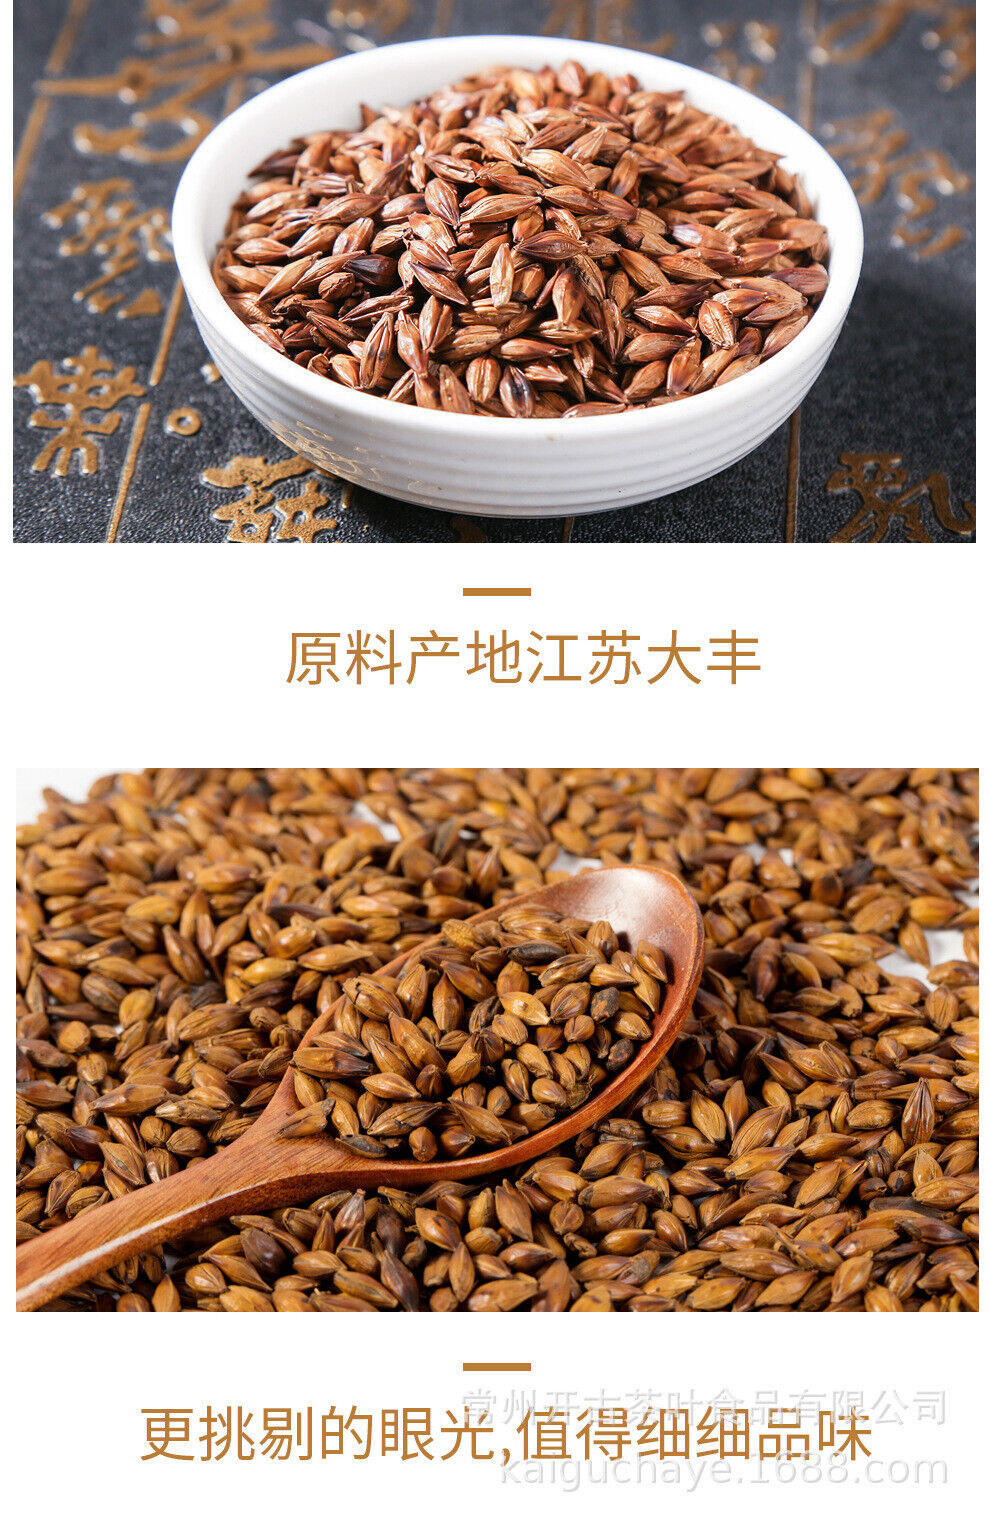 HelloYoung Small waist tea Liangshan black buckwheat tea whole malt buckwheat tea 150g